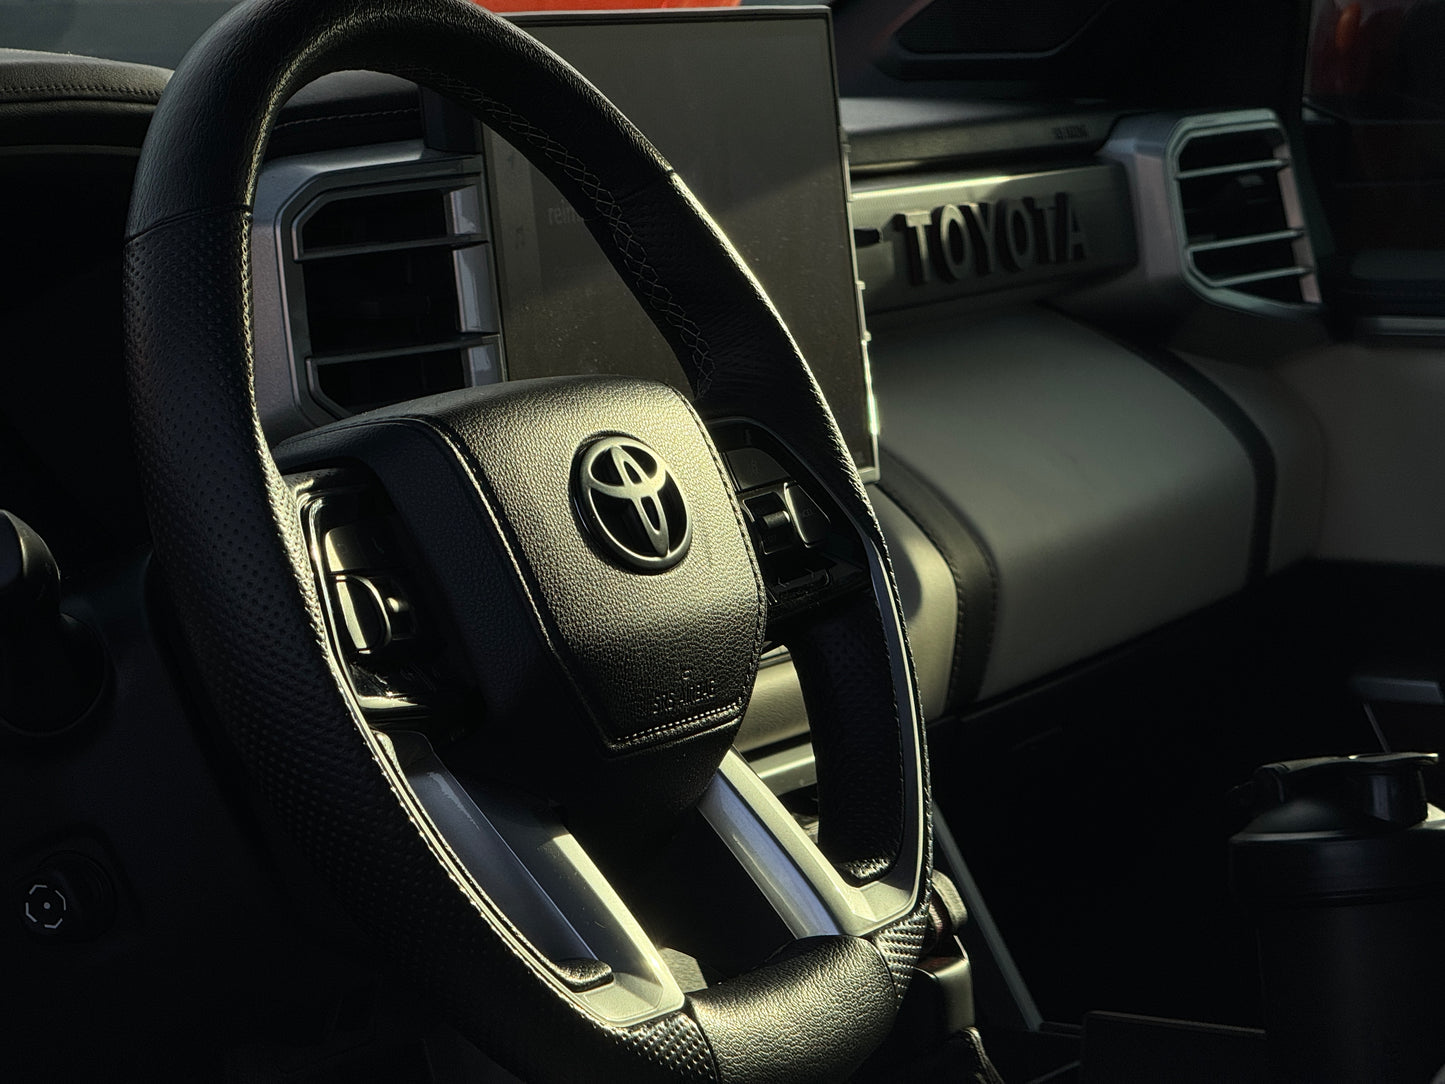 Black Toyota Steering Wheel Emblem Cover